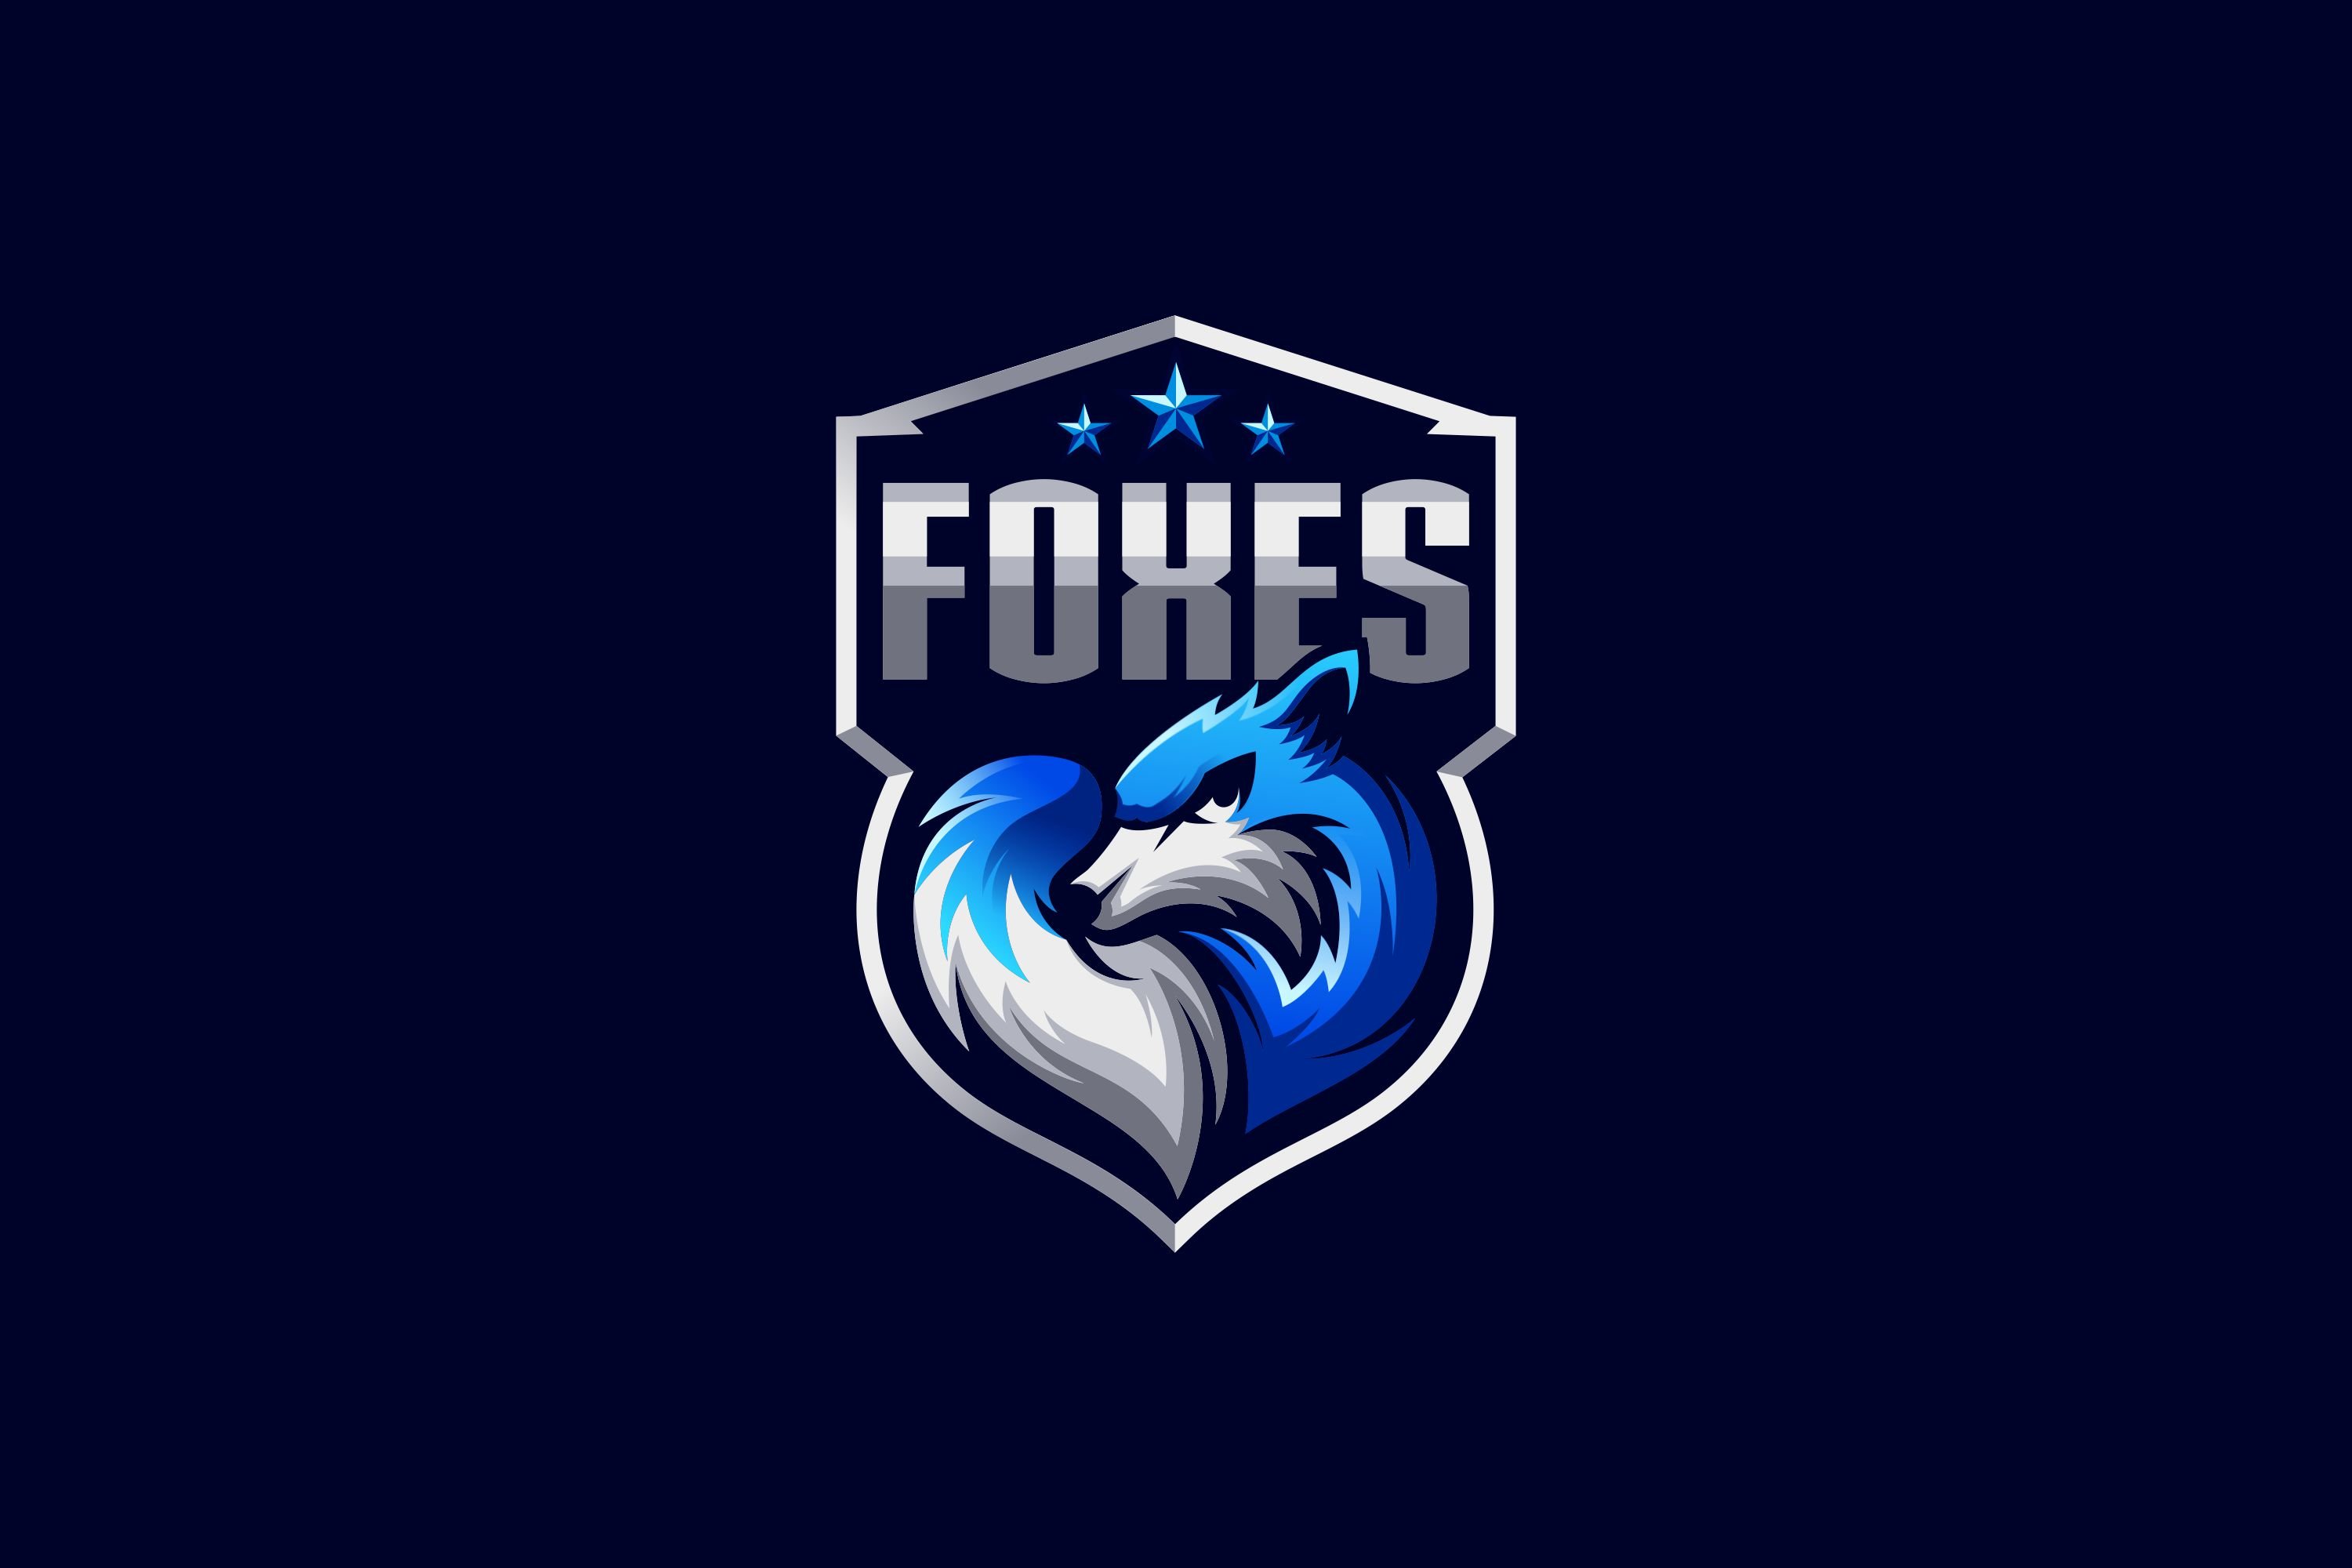 foxes logo design cover image.